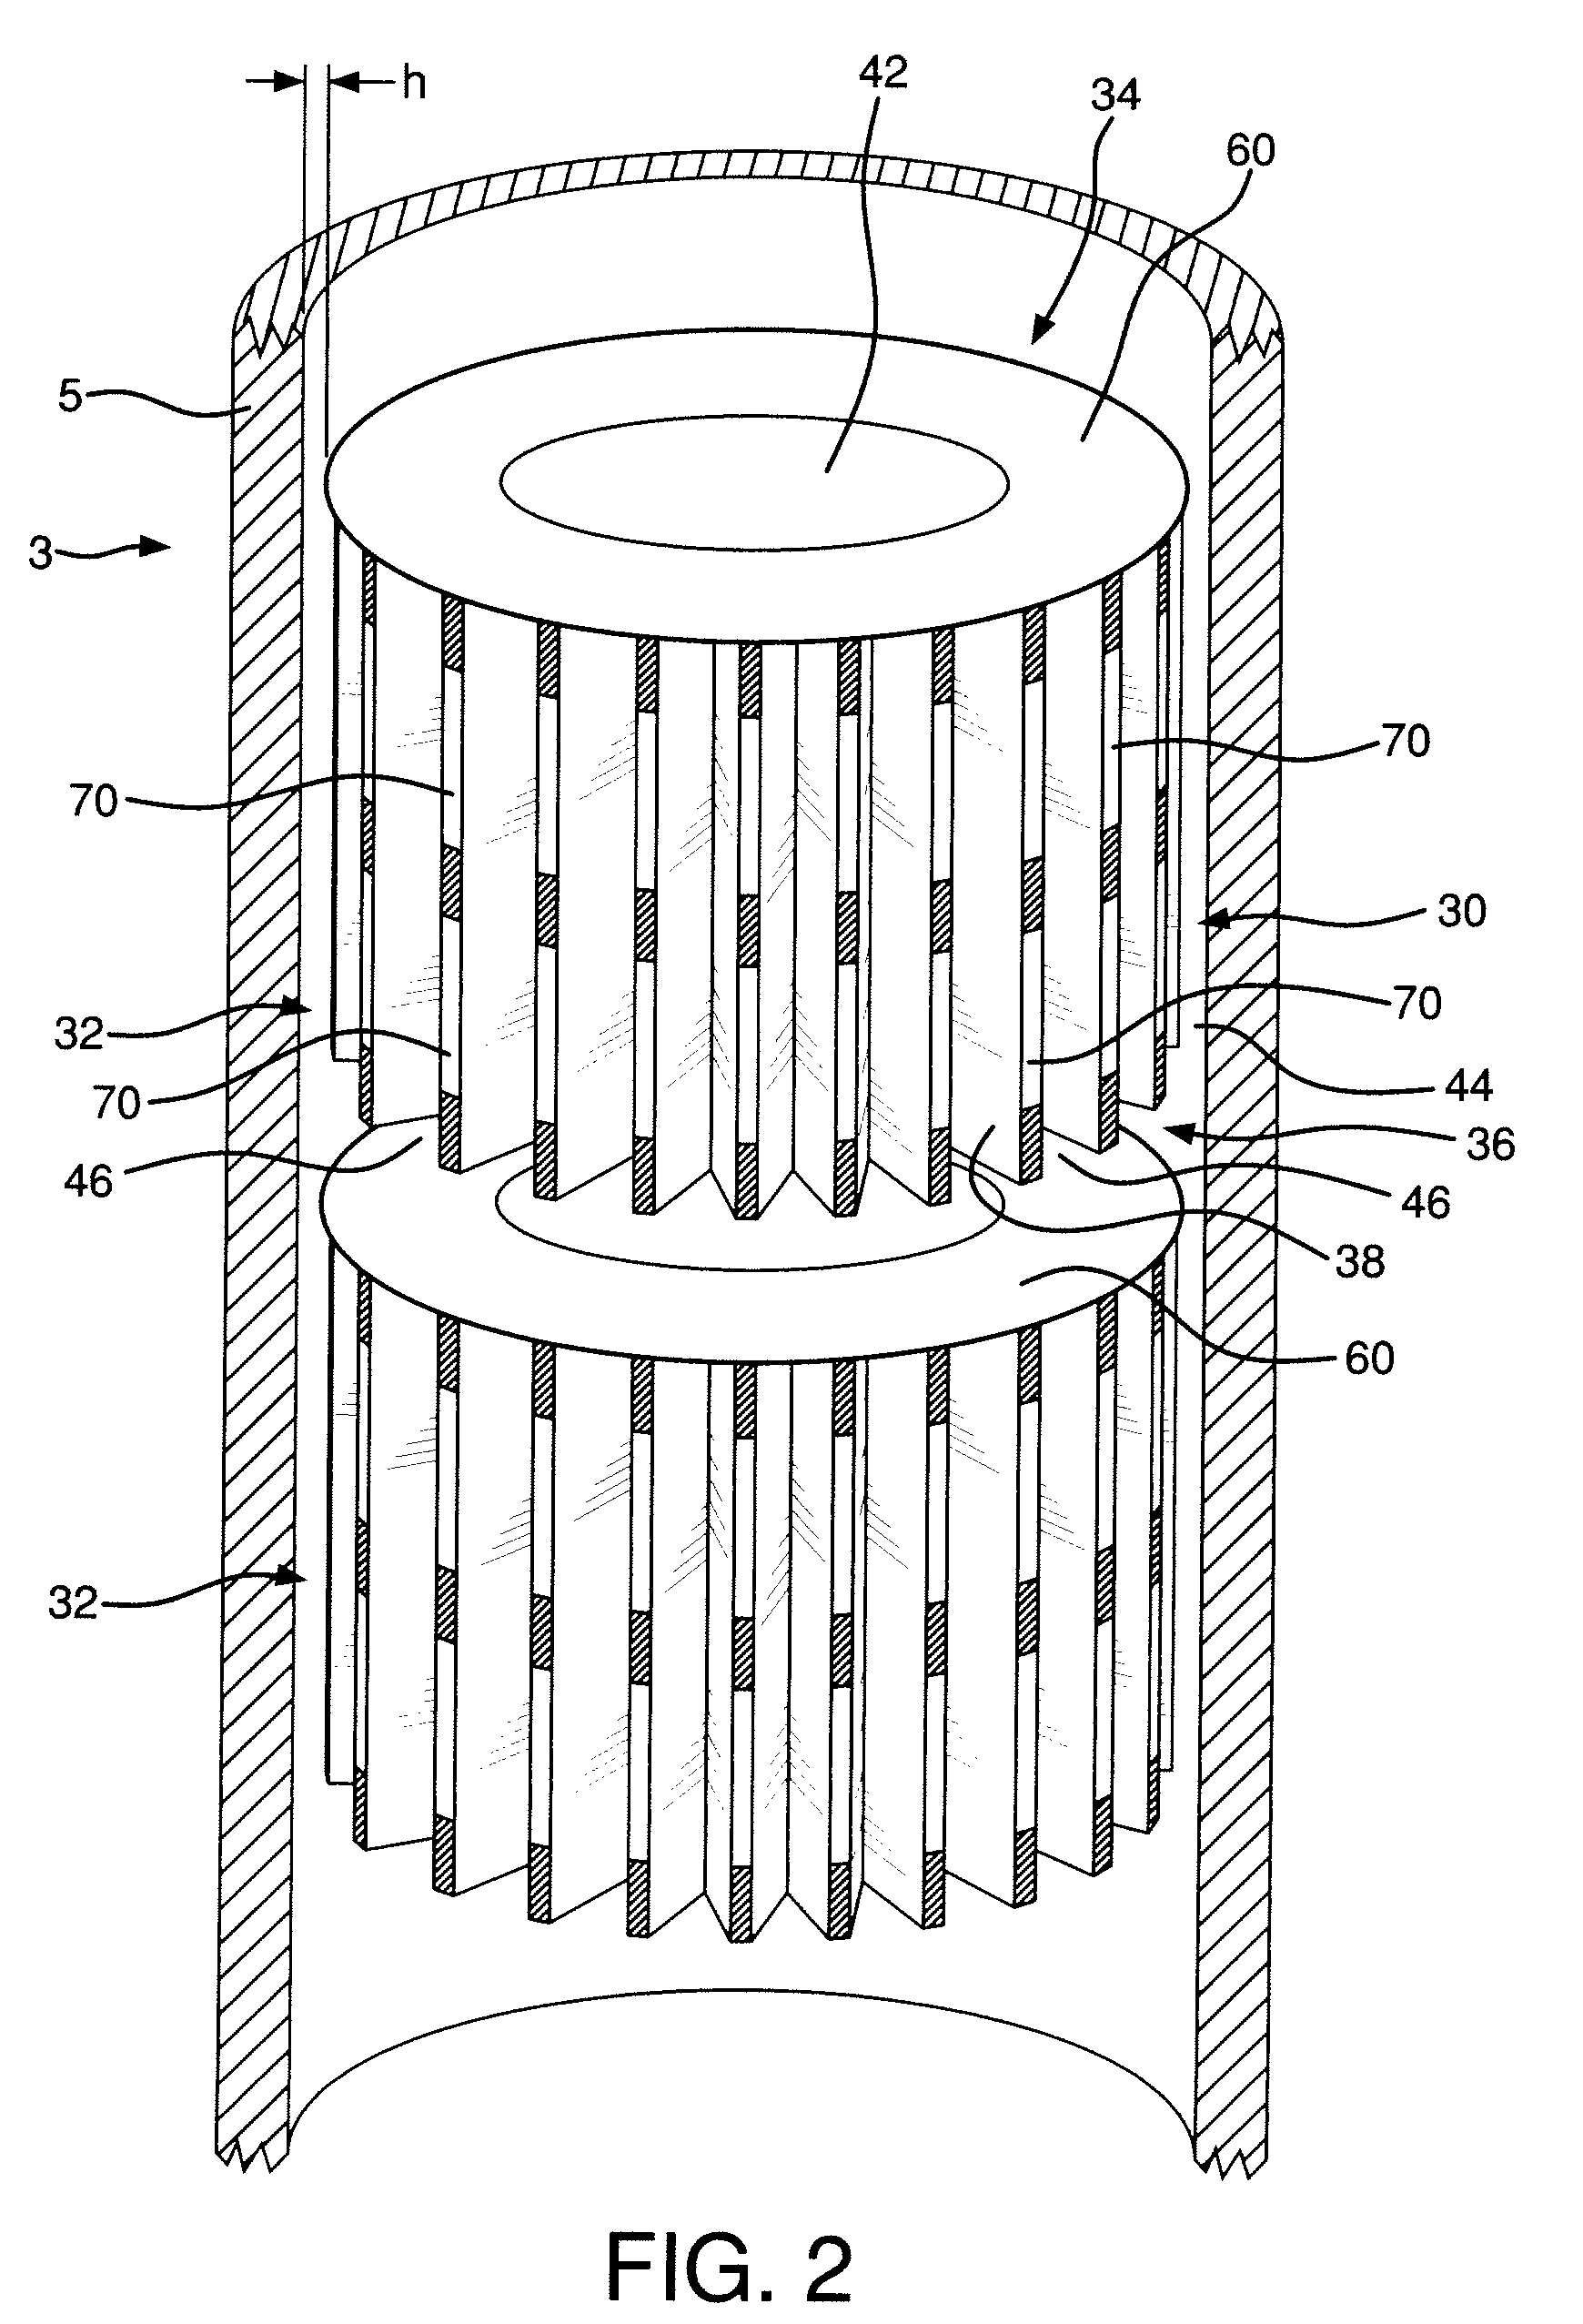 Tubular reactor with jet impingement heat transfer